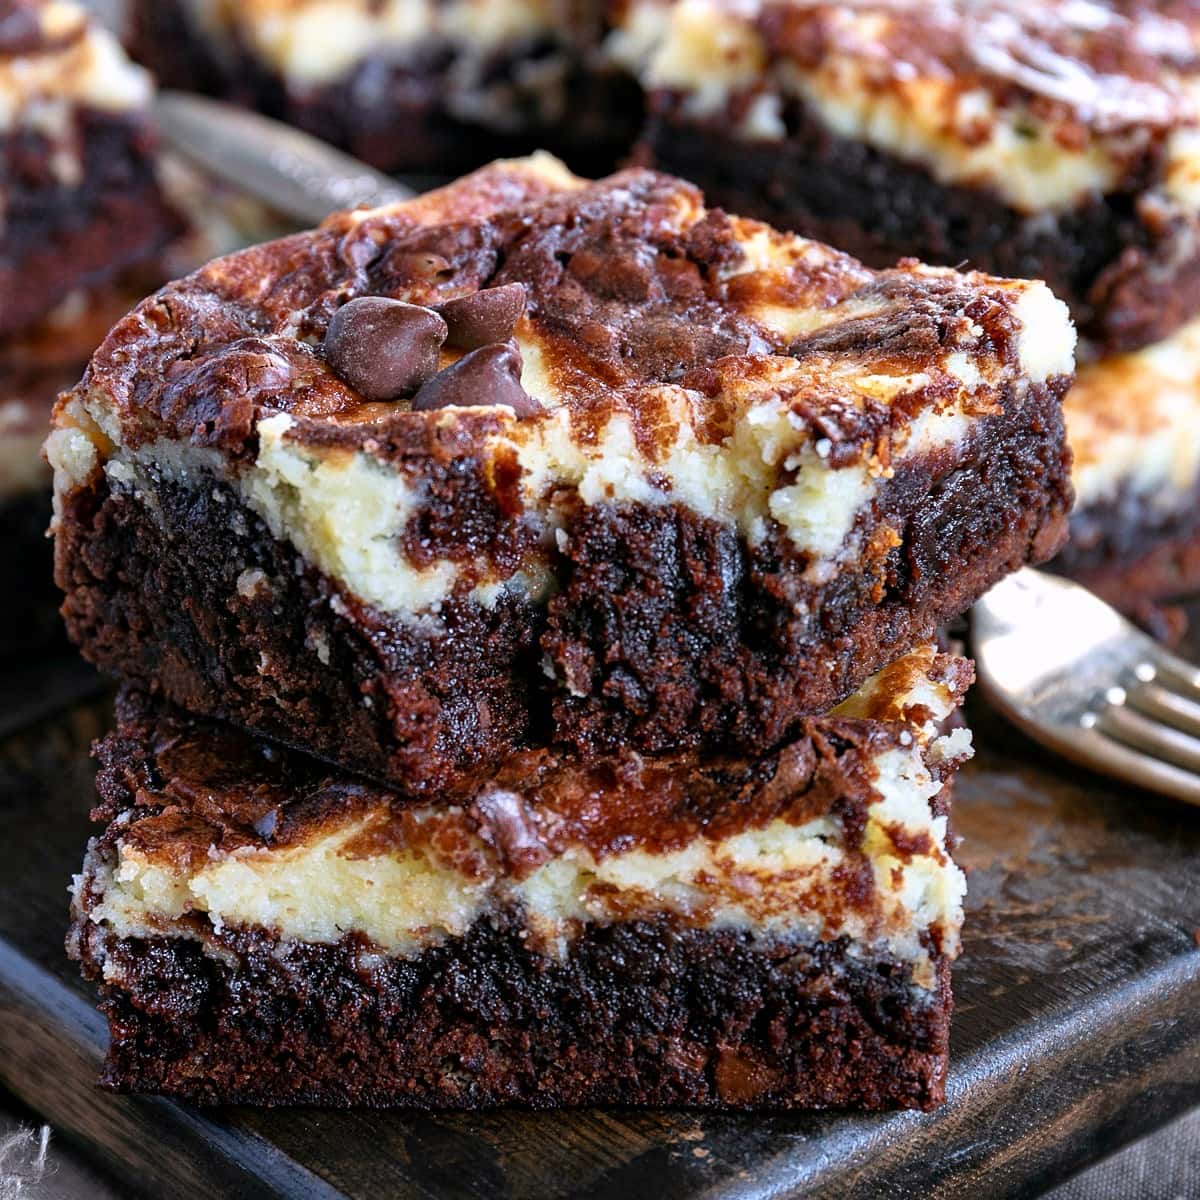 https://www.momontimeout.com/wp-content/uploads/2019/01/cheesecake-brownies-recipe-square.jpg